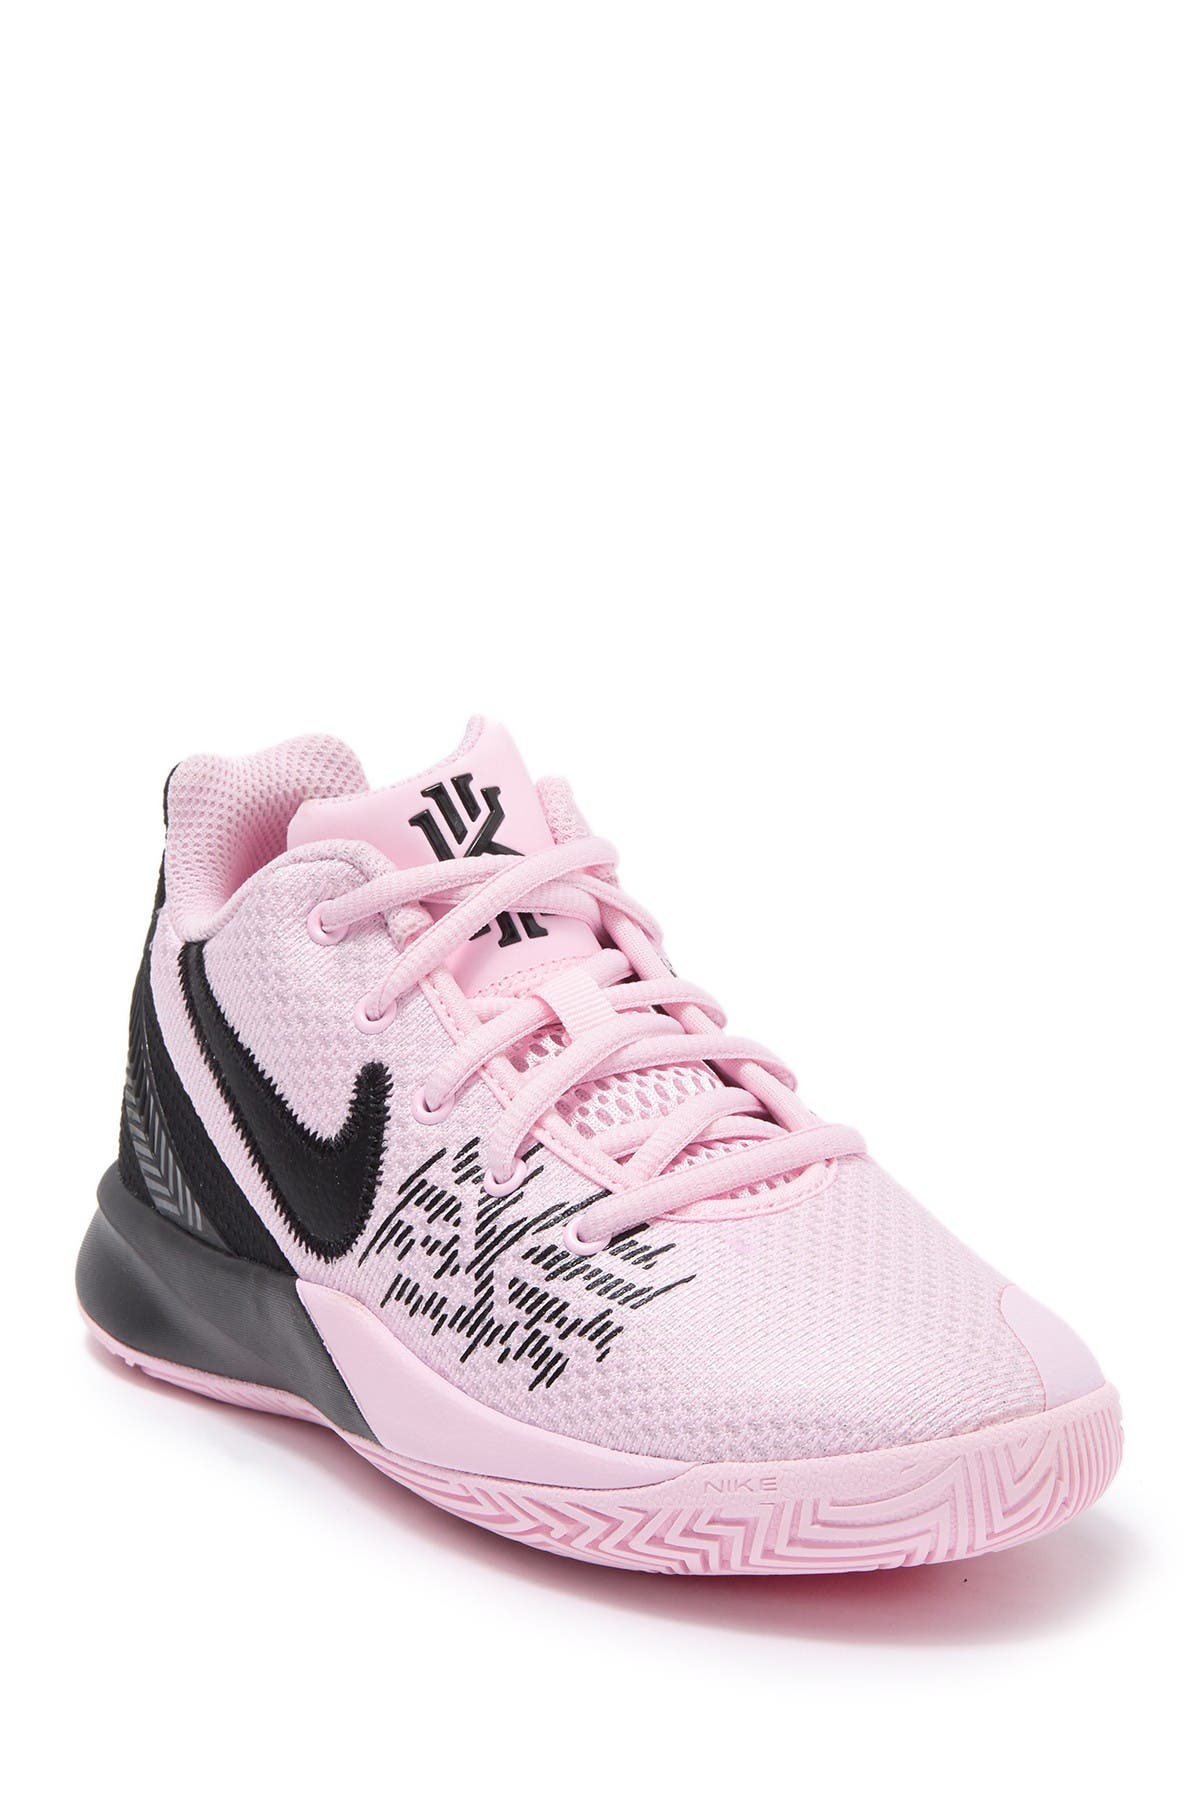 Nike | Kyrie Flytrap II Basketball Shoe 